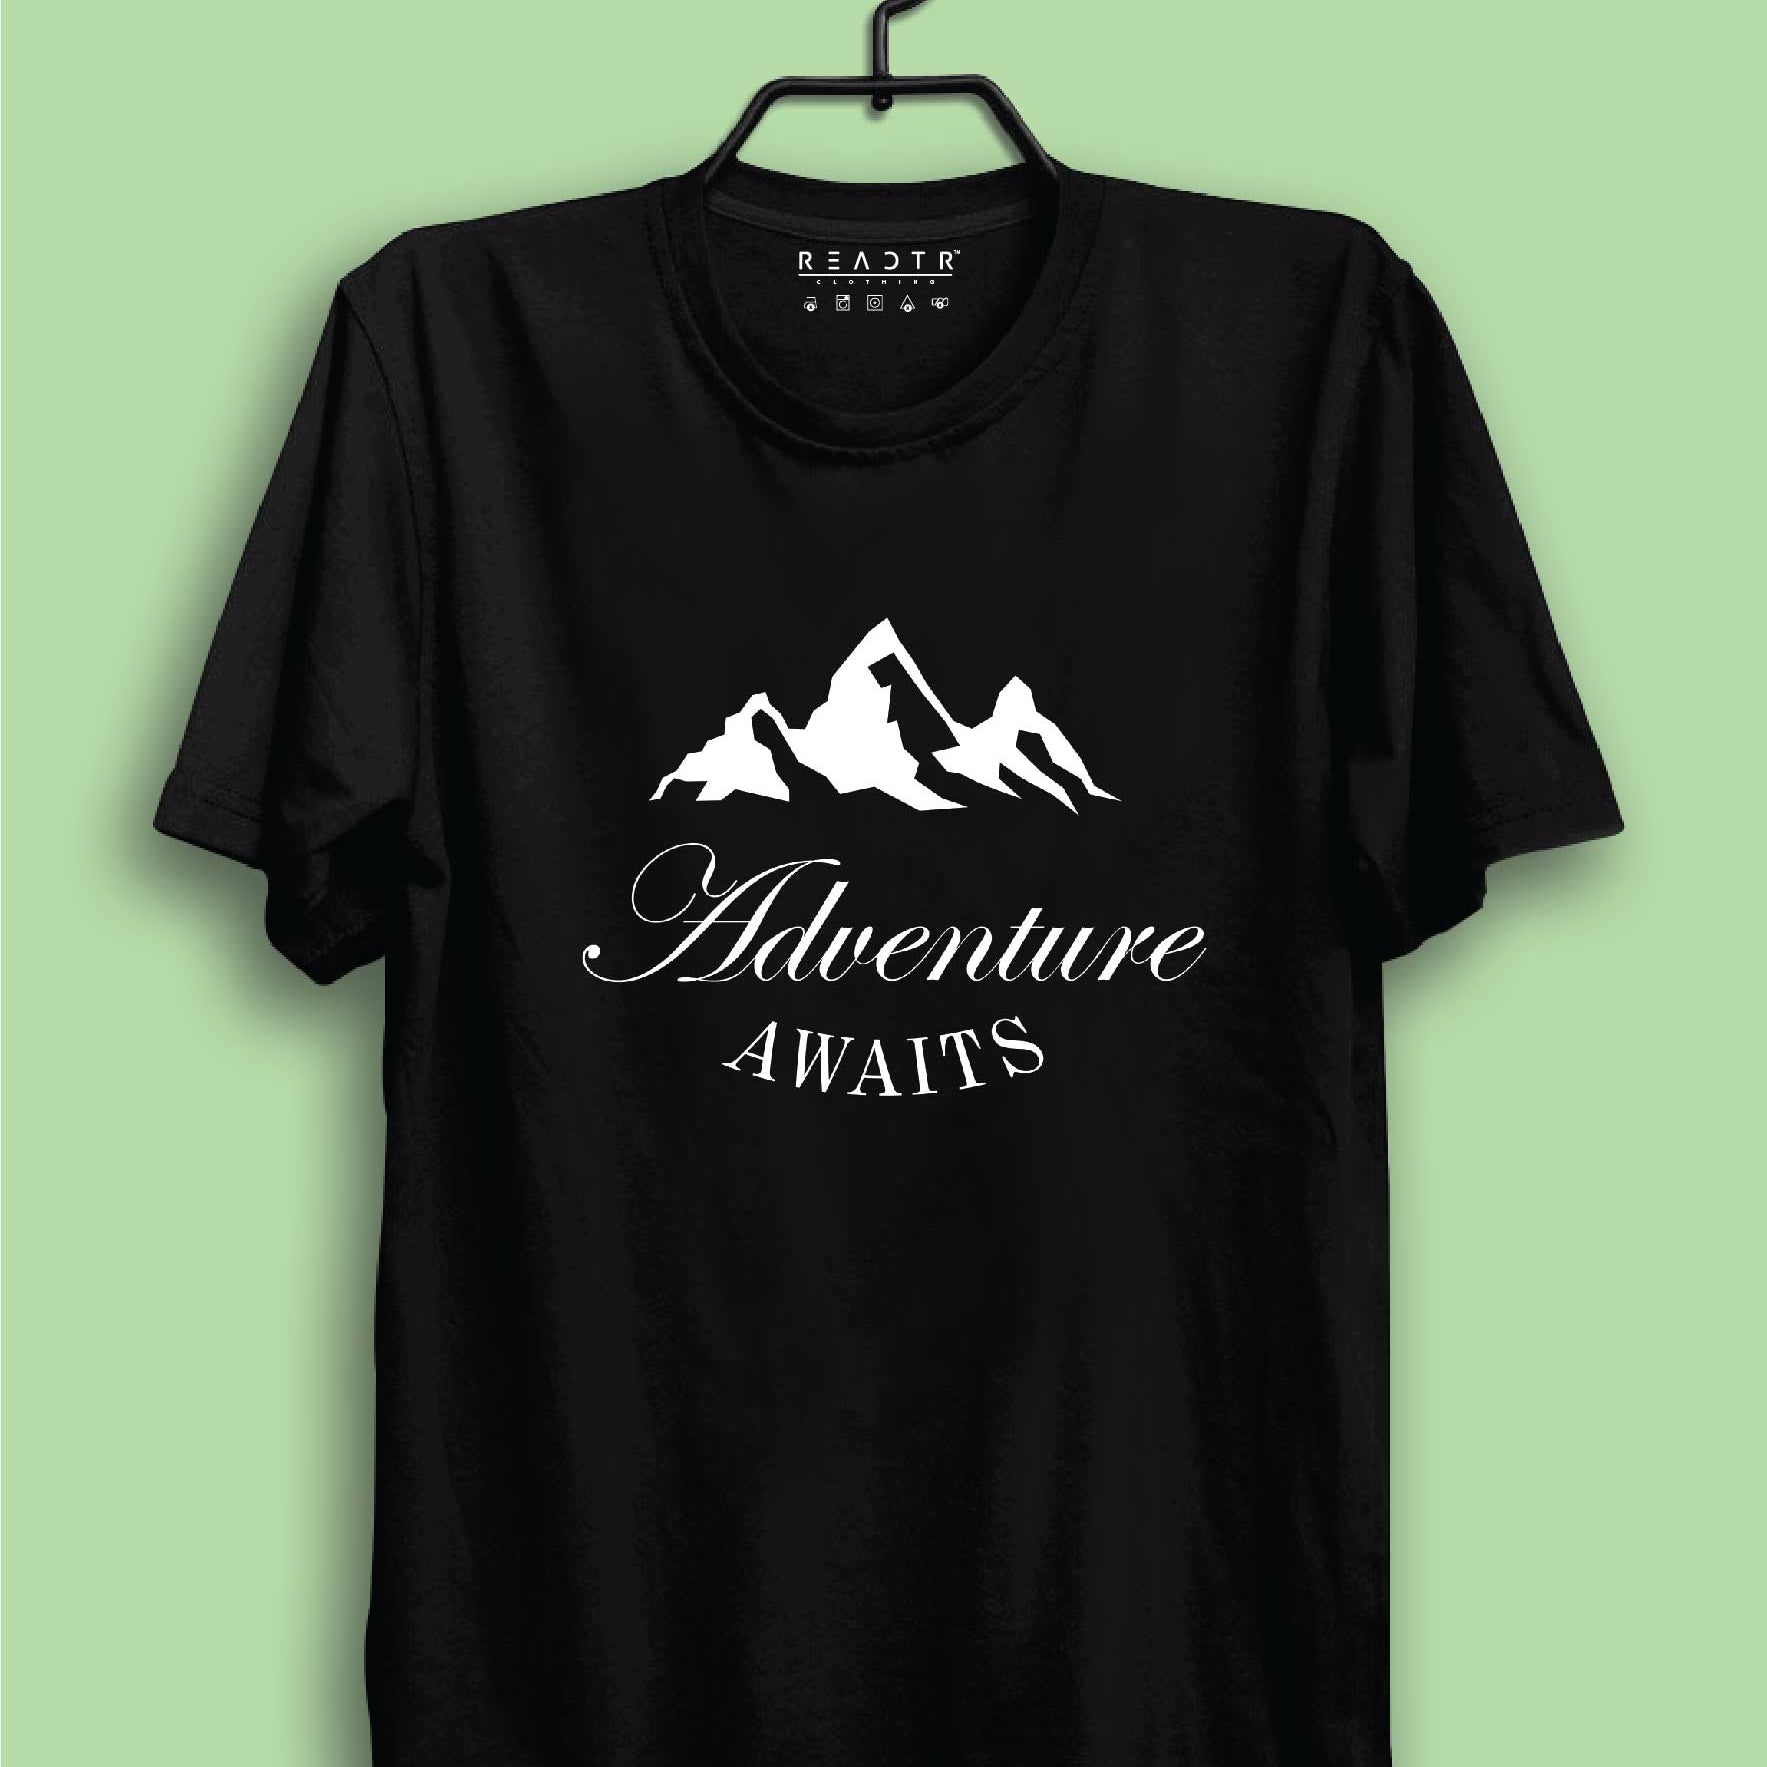 Adventure Awaits Reactr Tshirts For Men - Eyewearlabs